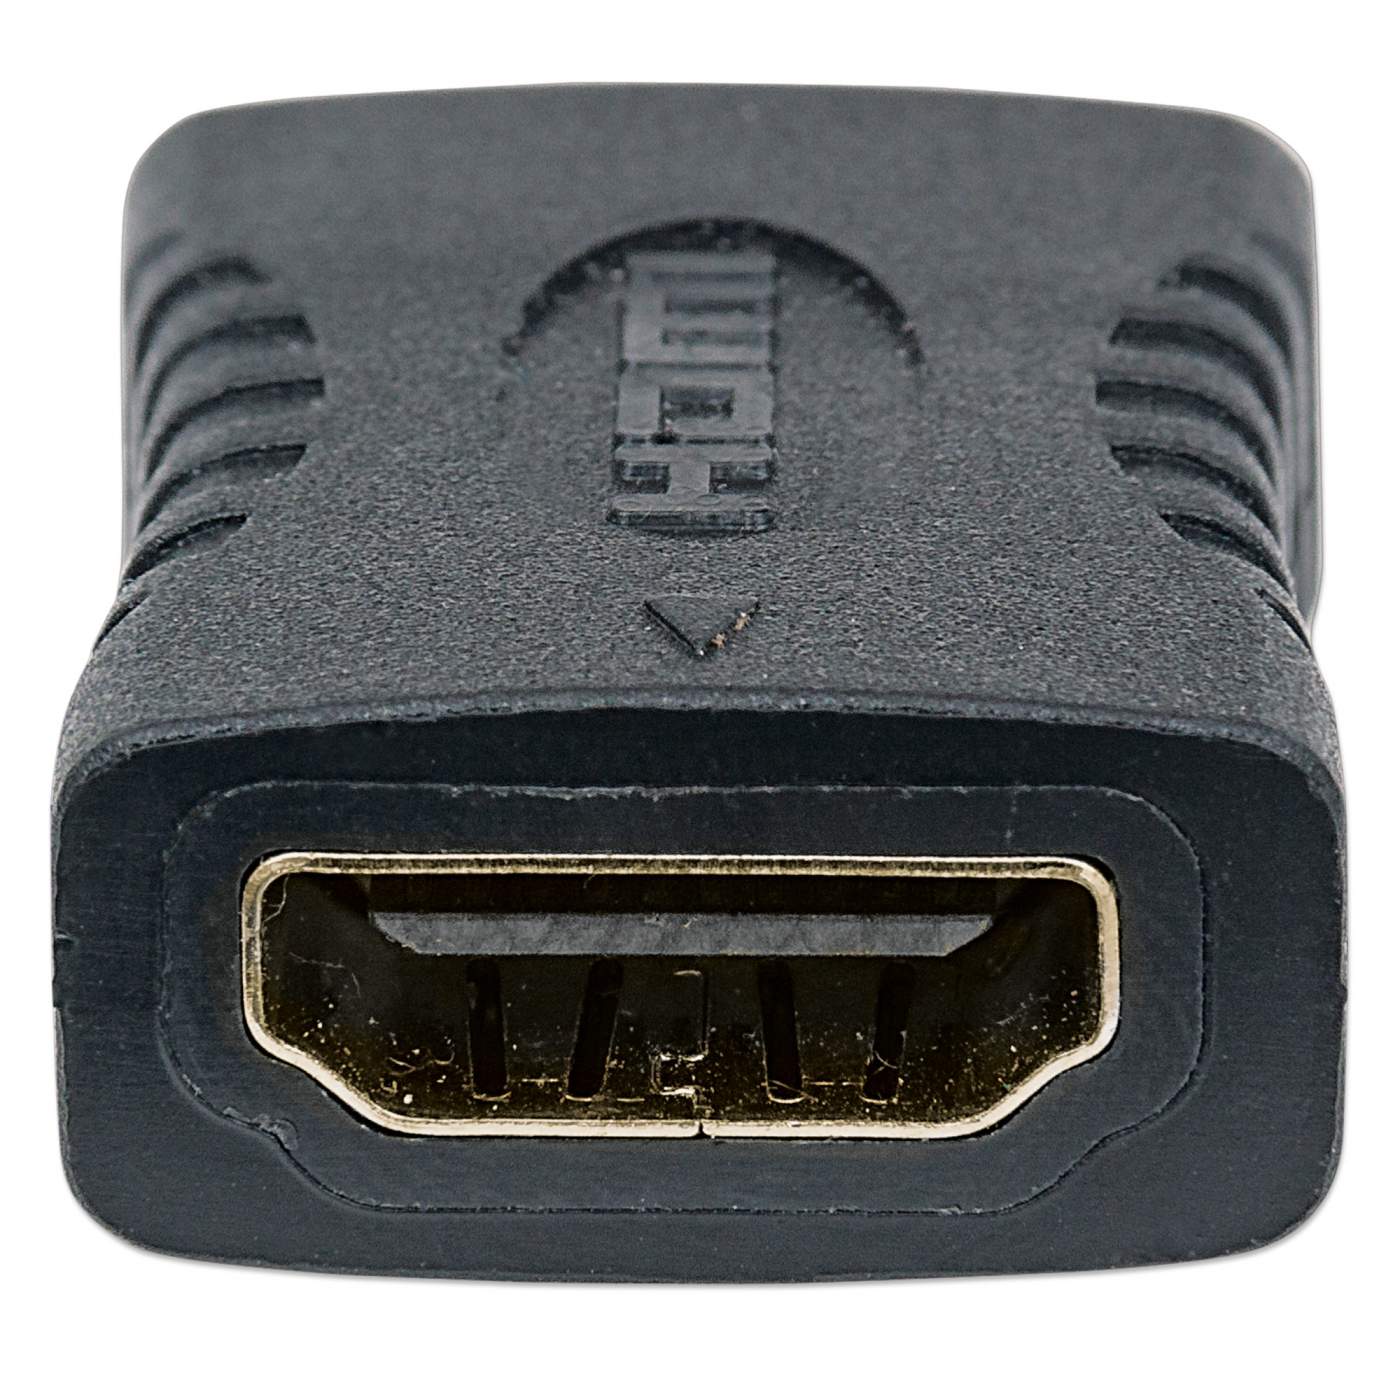 HDMI Coupler Image 6